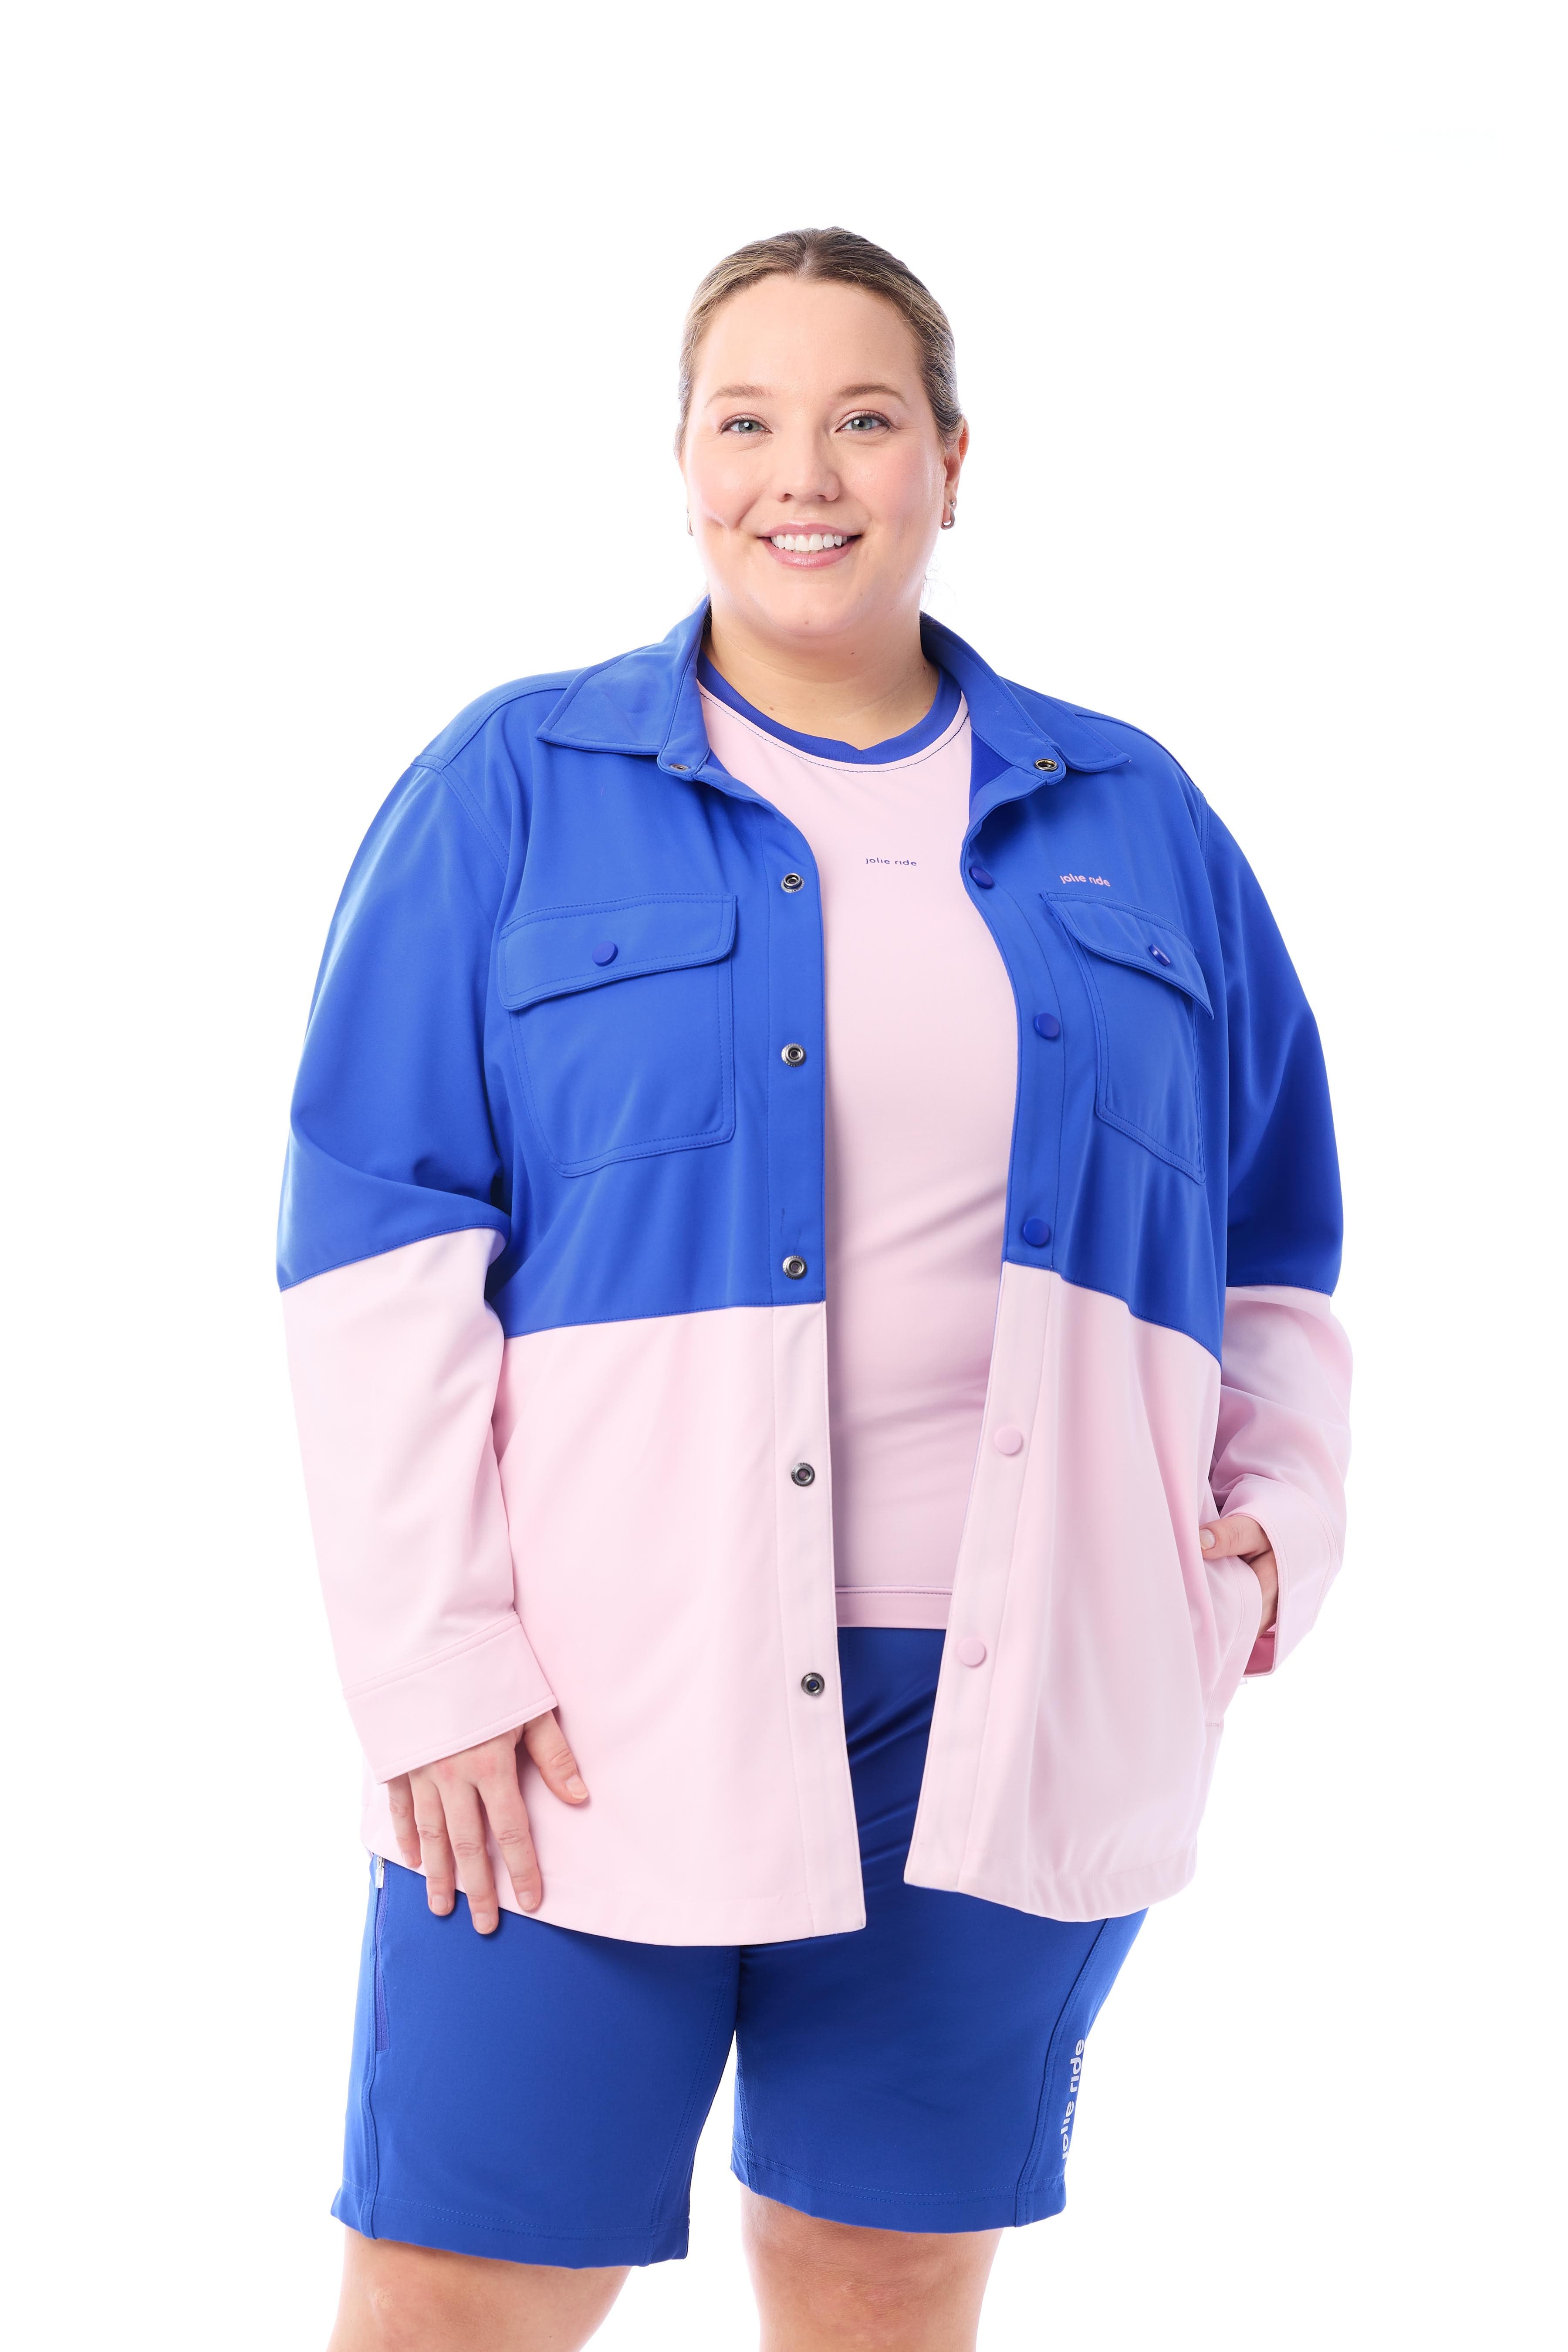 JolieRide Shirt Cobalt blue -Pink / 1X mtb windbreaker shirt - ultimate adventure gear for unpredictable weather